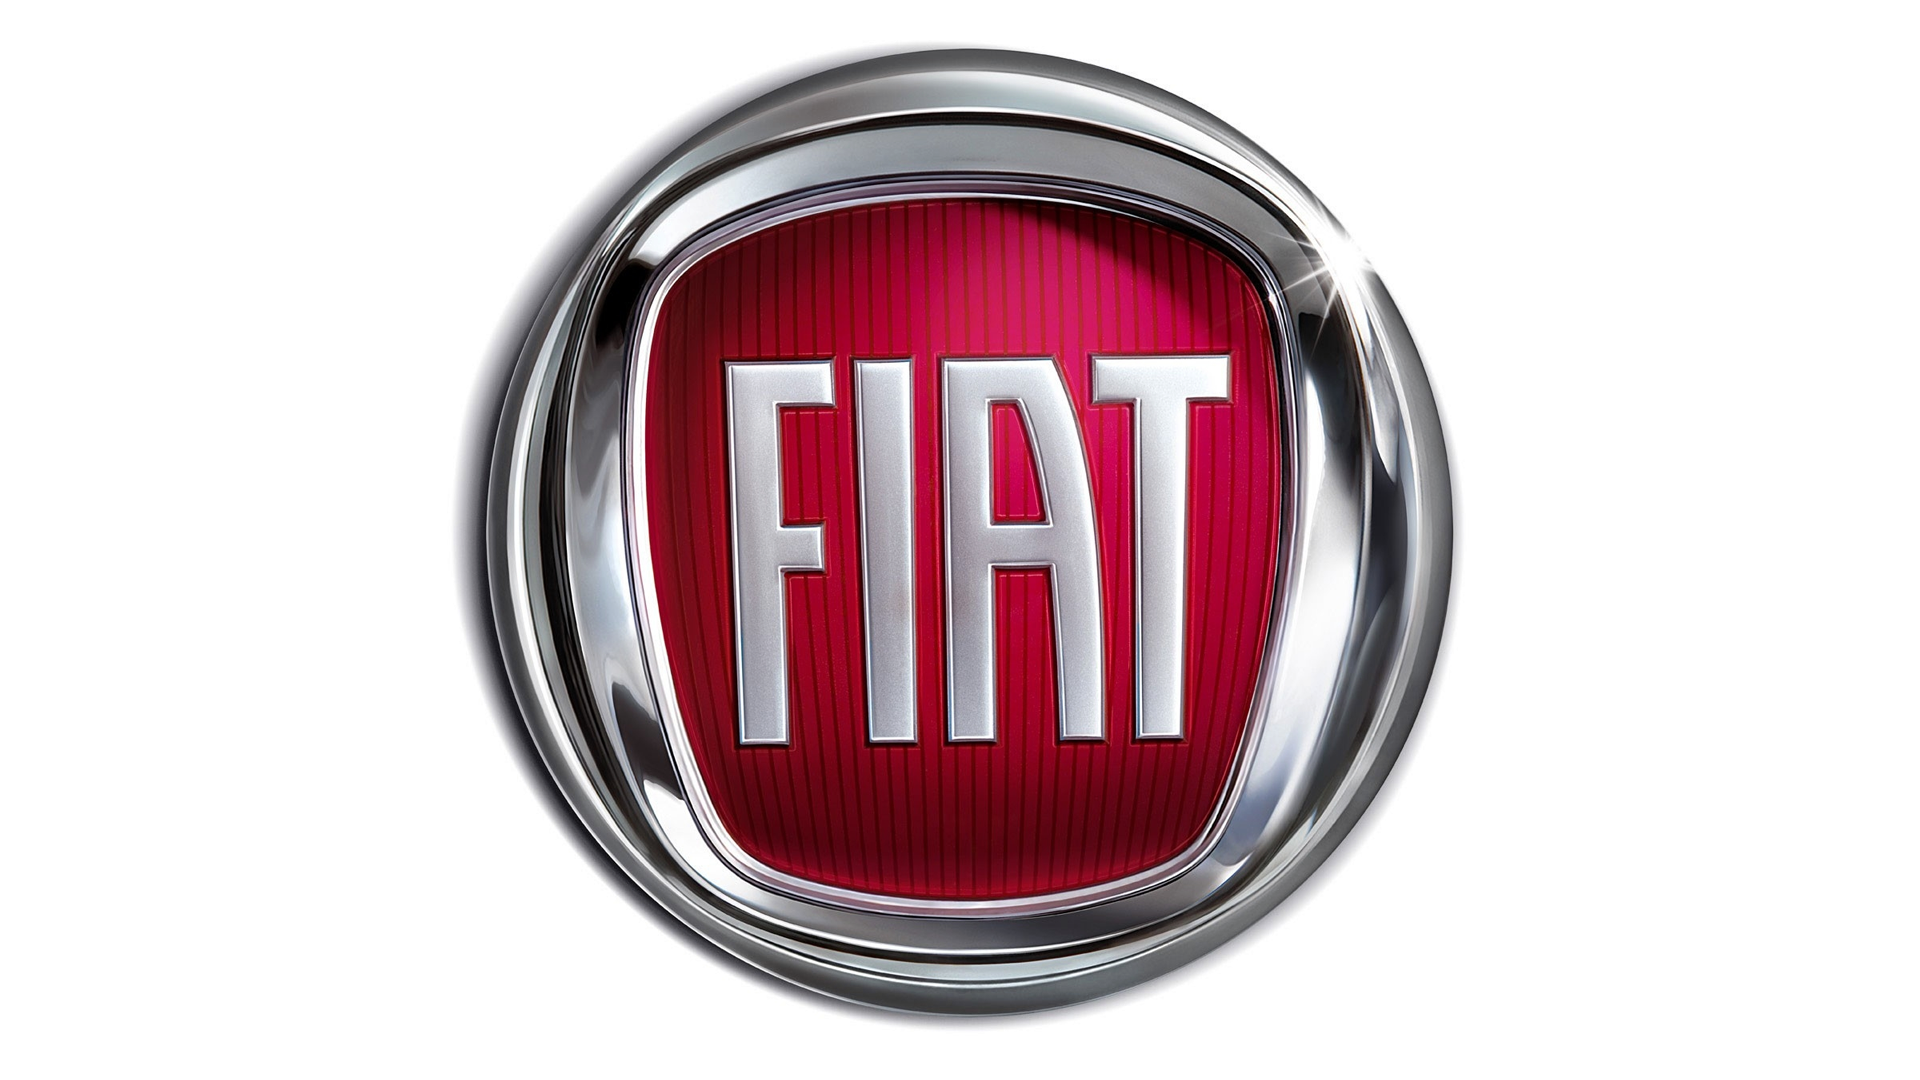 Fiat Brand Logo